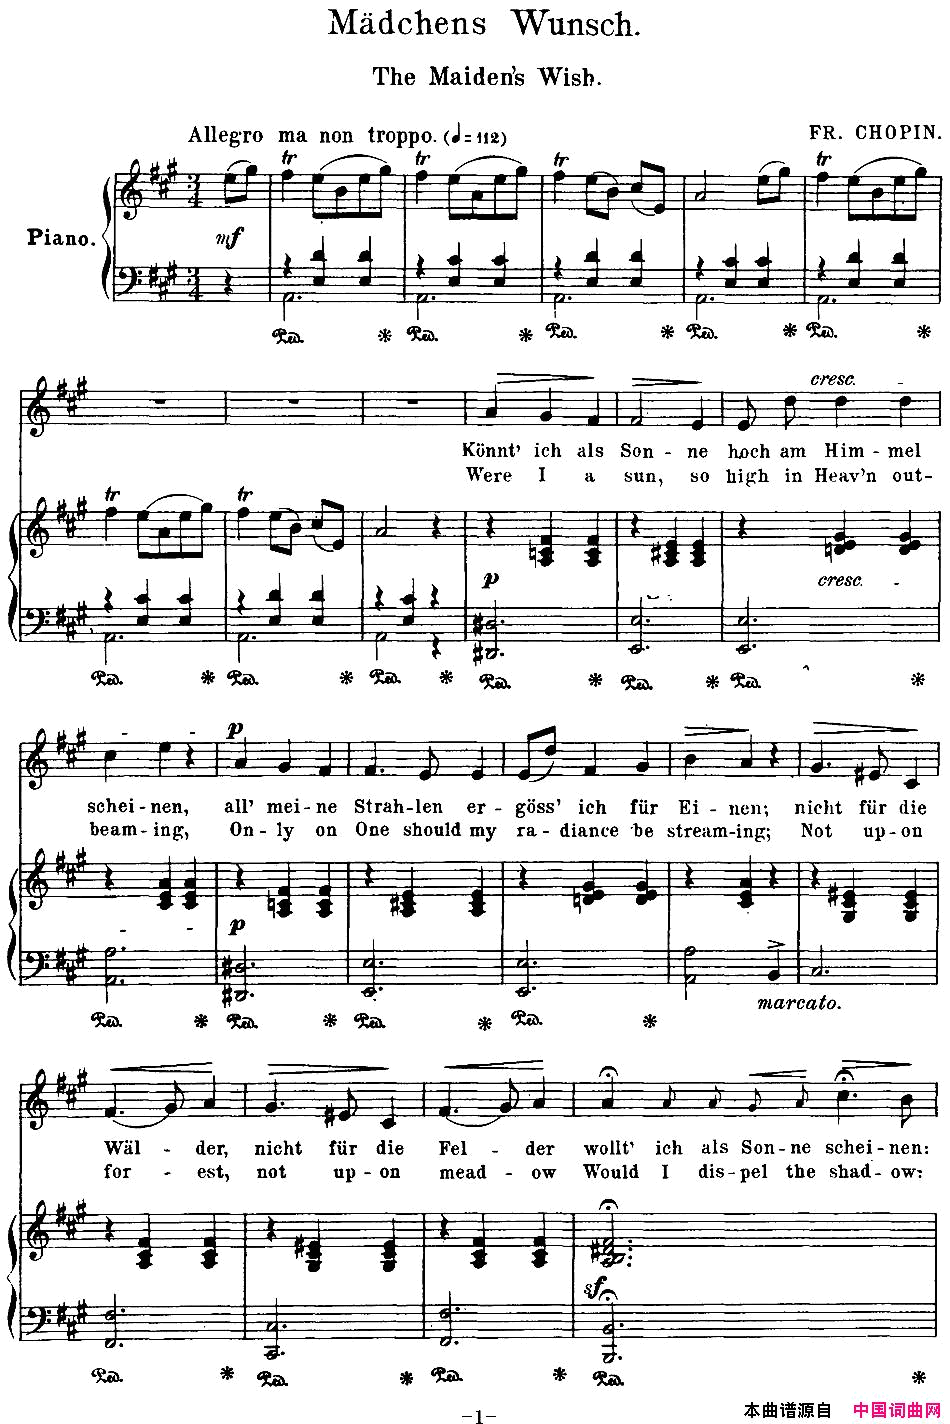 Chopin_17PolishSongsOp.74，No.1MadchensWunsch.TheMaiden’sWisb.钢琴伴奏谱Chopin_17_Polish_Songs_Op.74，No.1M